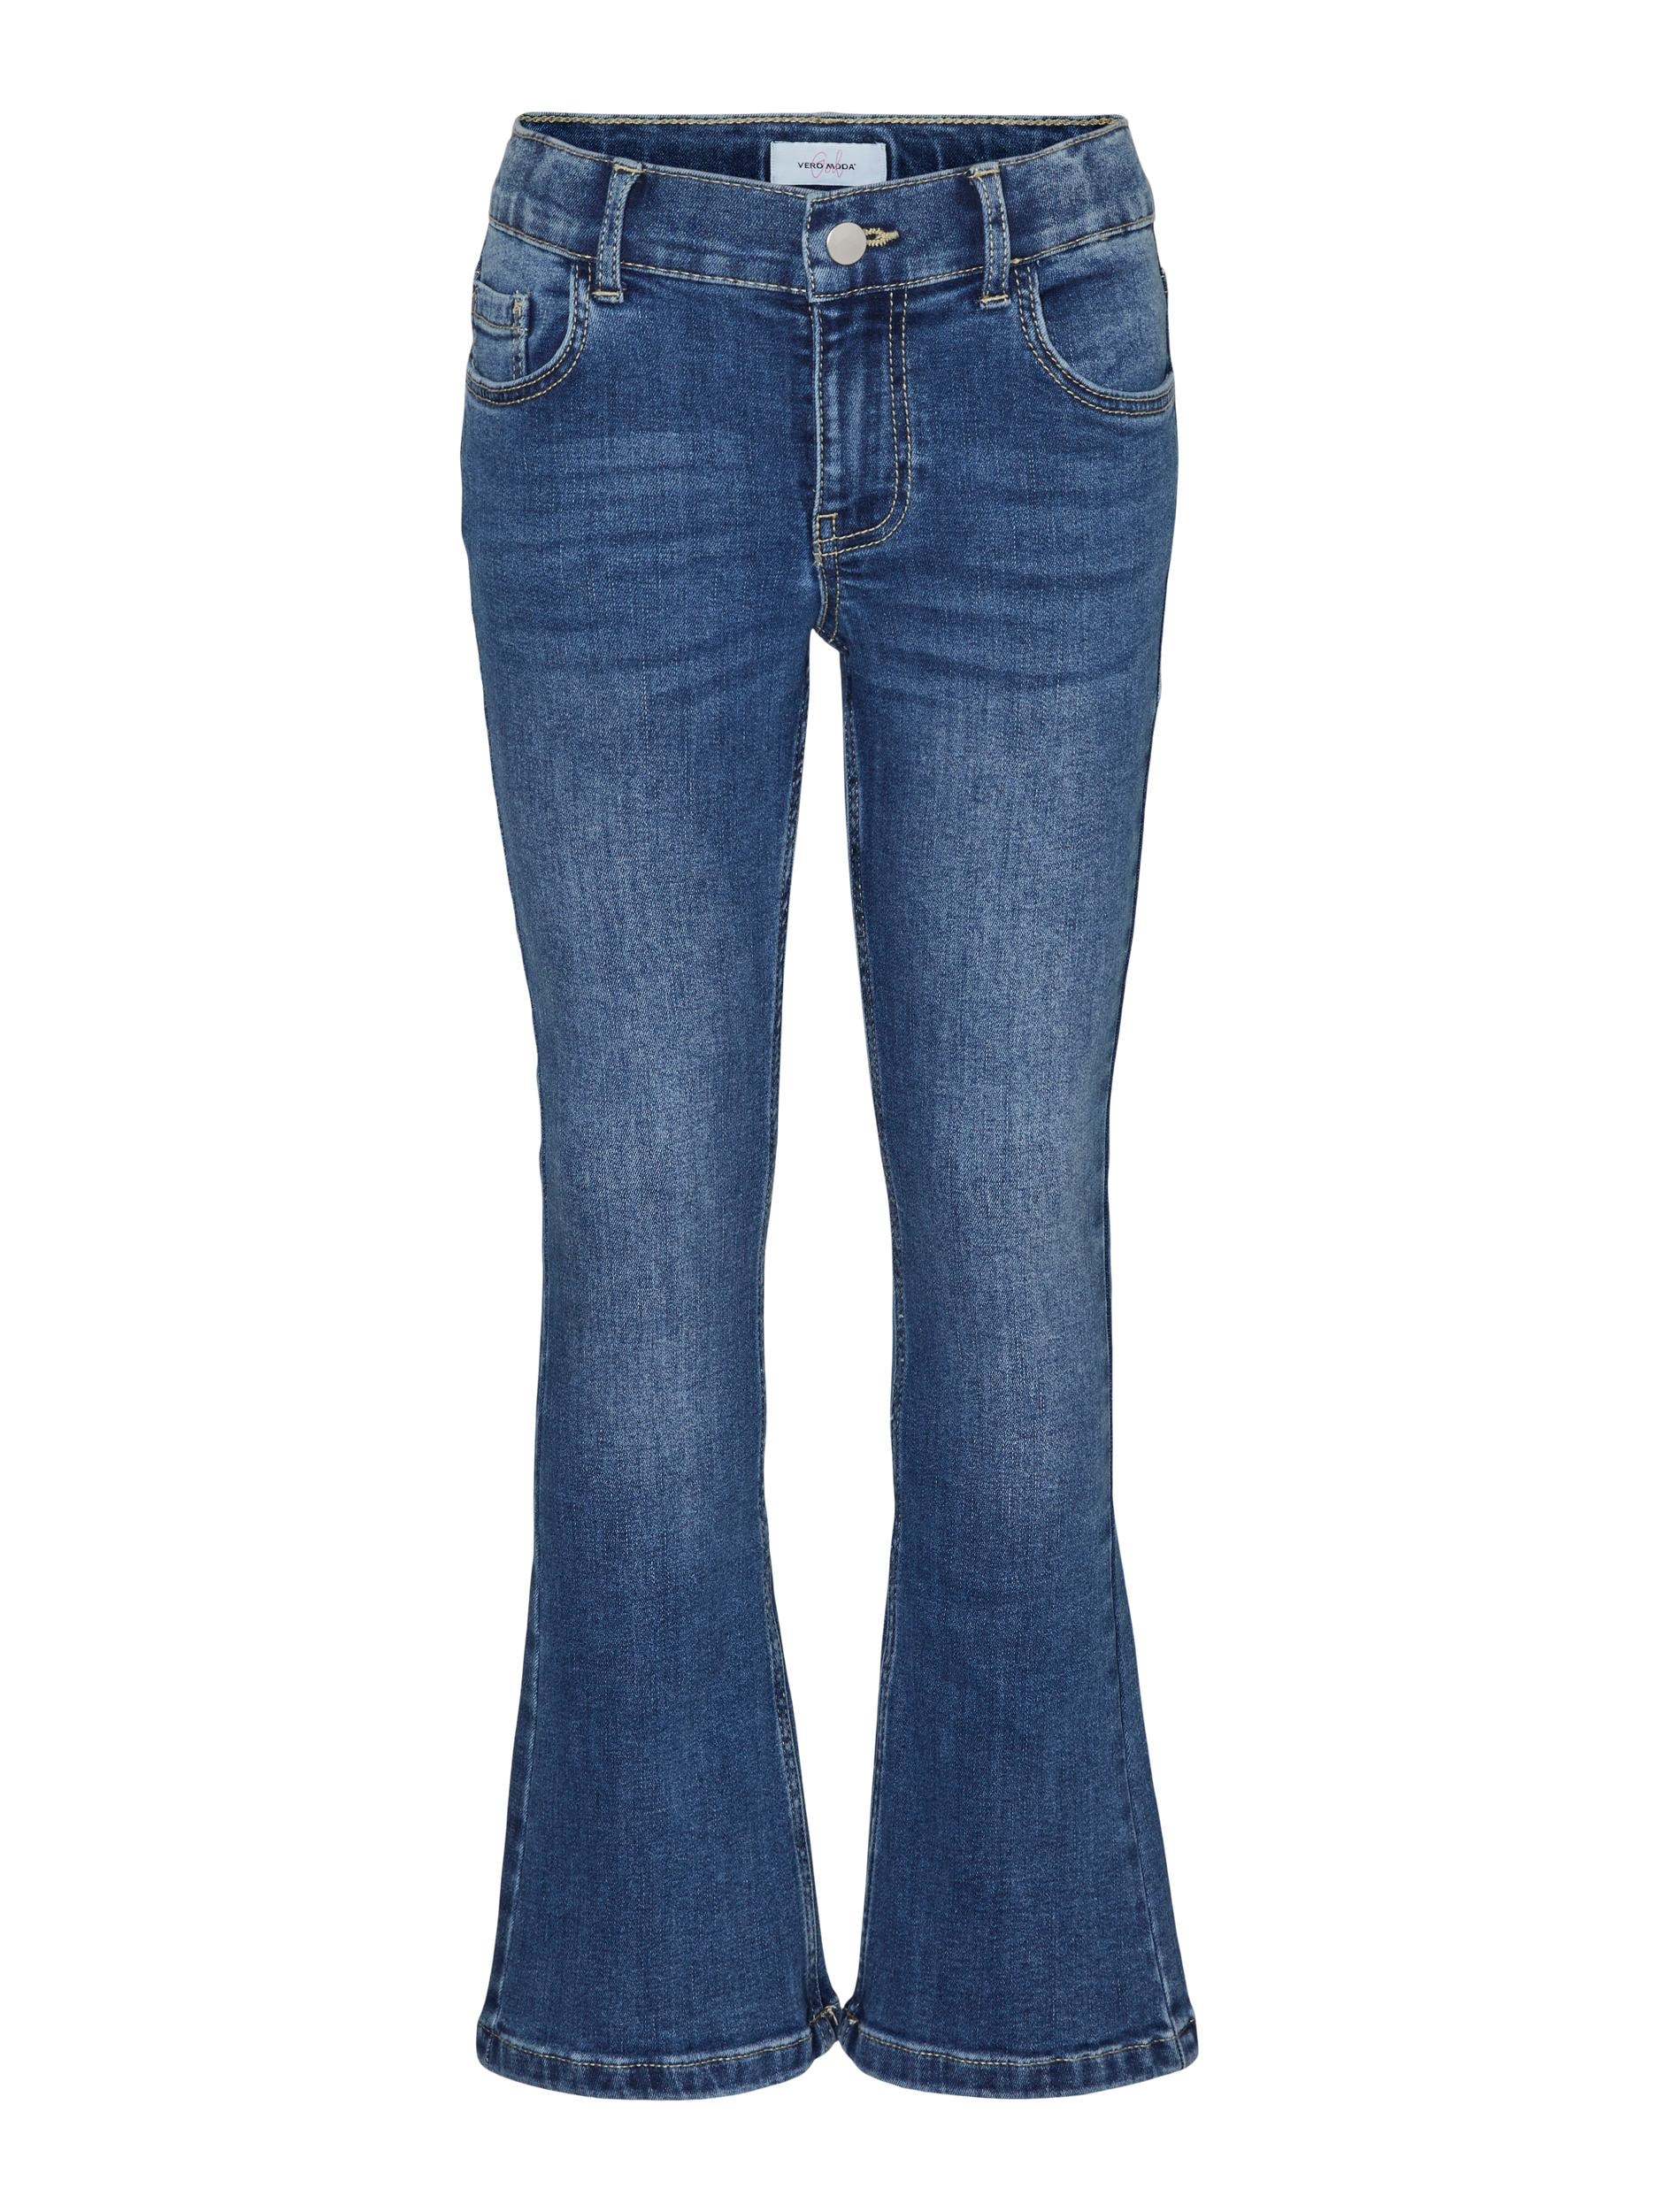 Vero Moda Girl Bootcut-Jeans »VMRIVER FLAR DNM JNS VI3336 GA GIRL NOOS«  online kaufen | Stretchjeans